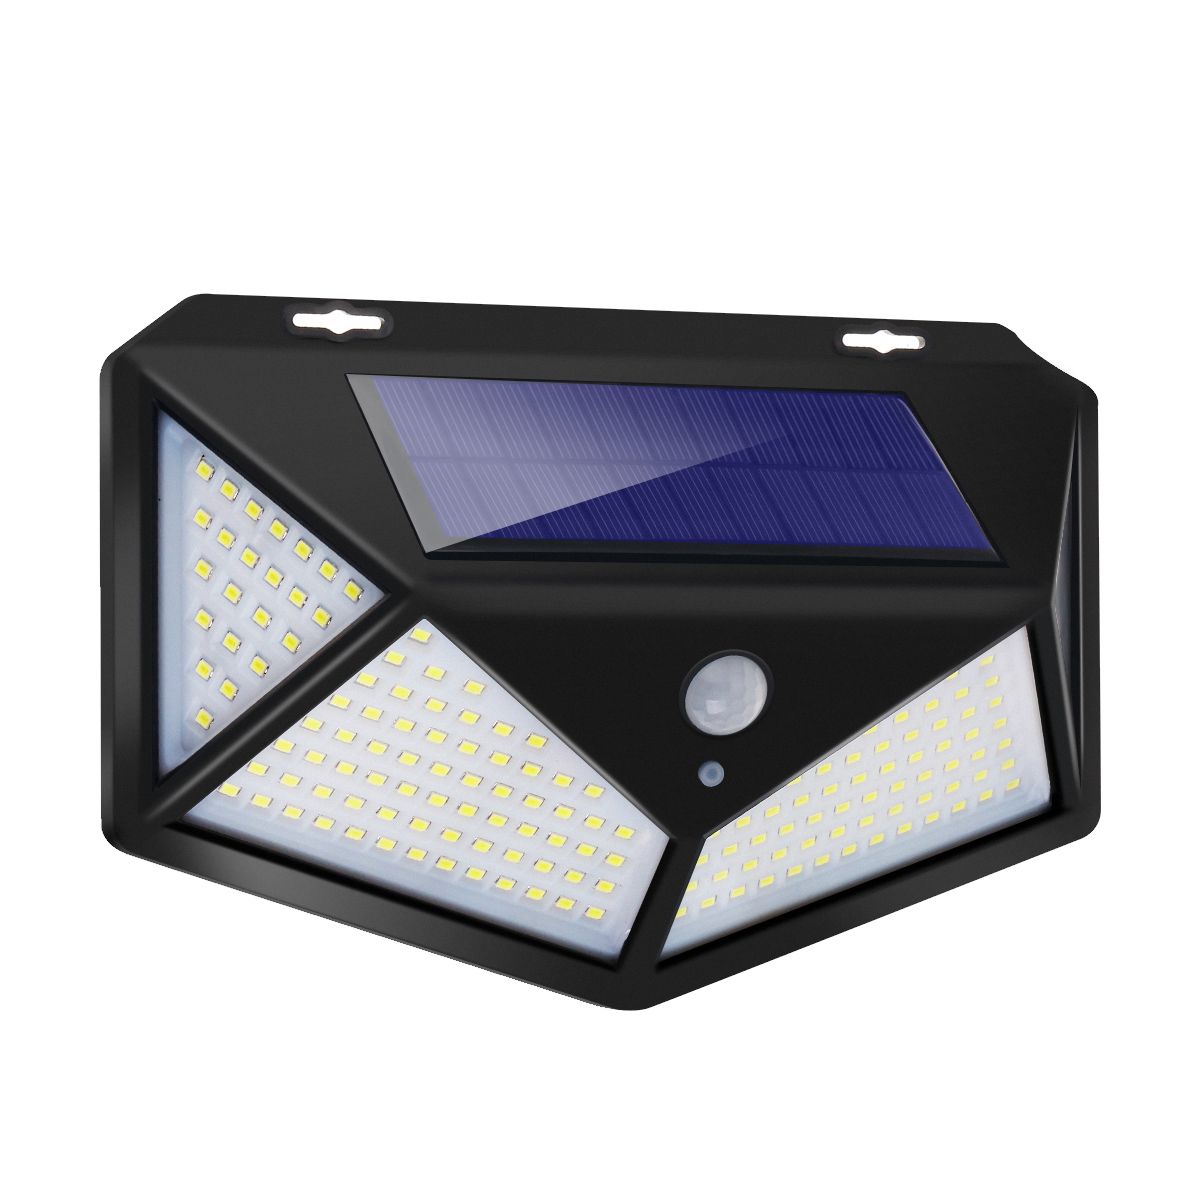 124Pcs-ARILUX-180LED-Outdoor-Solar-Powered-Wall-Lamps-PIR-Motion-Sensor-Garden-Security-Solar-Lights-1712133